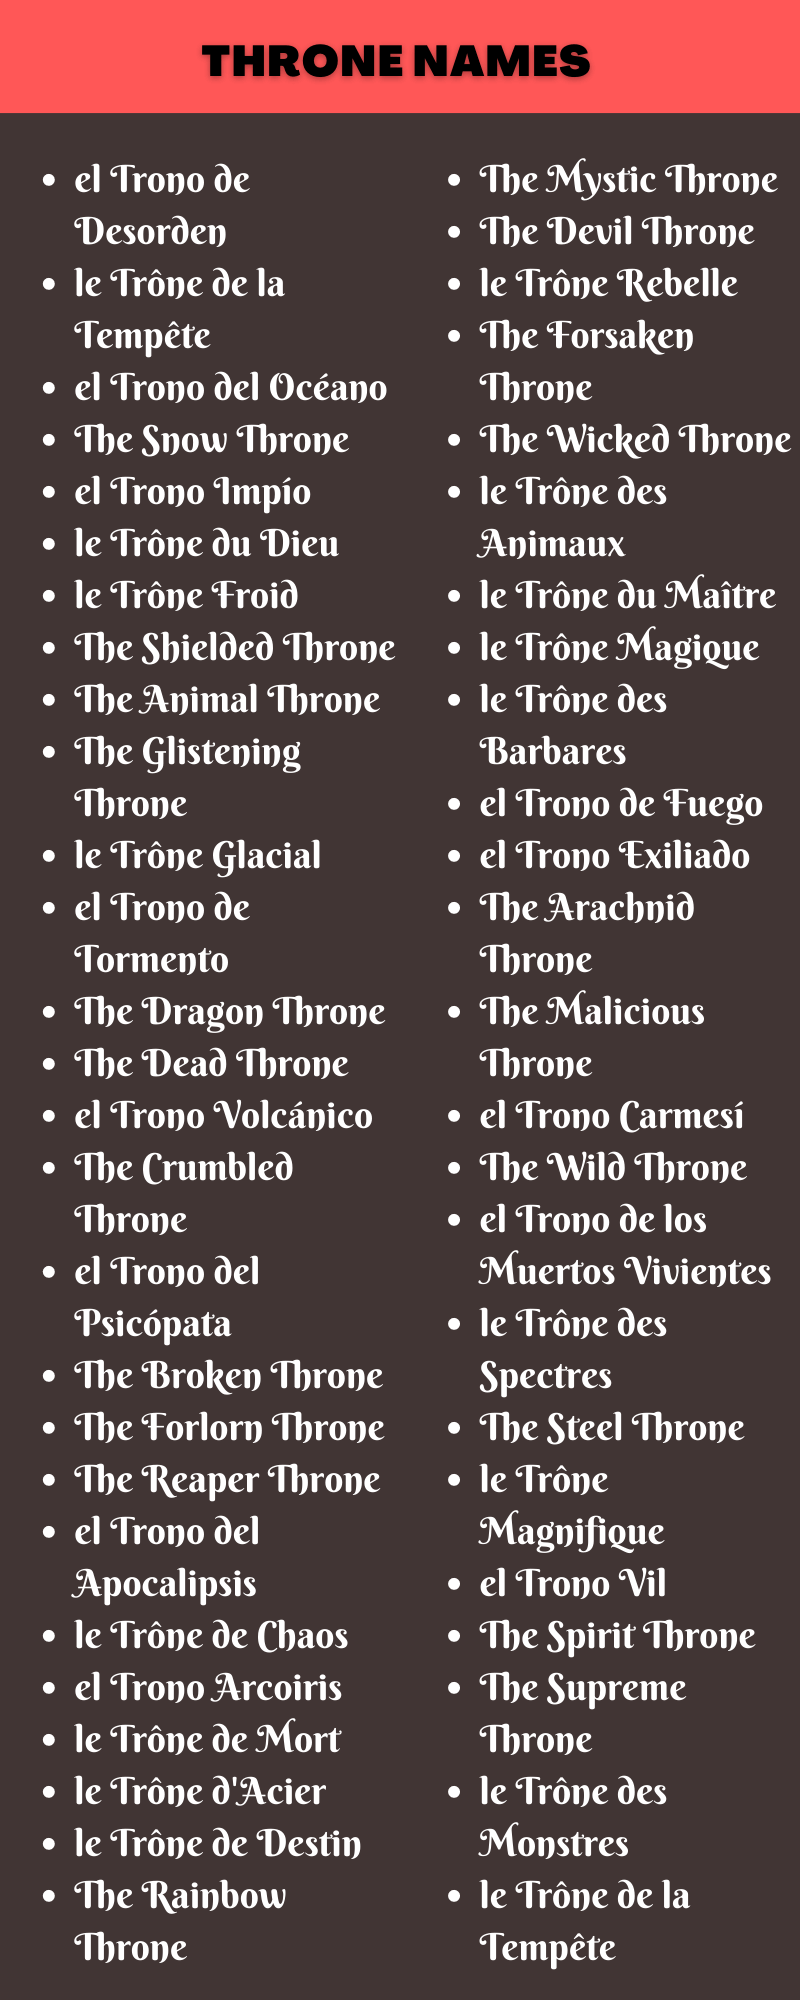 Throne Names